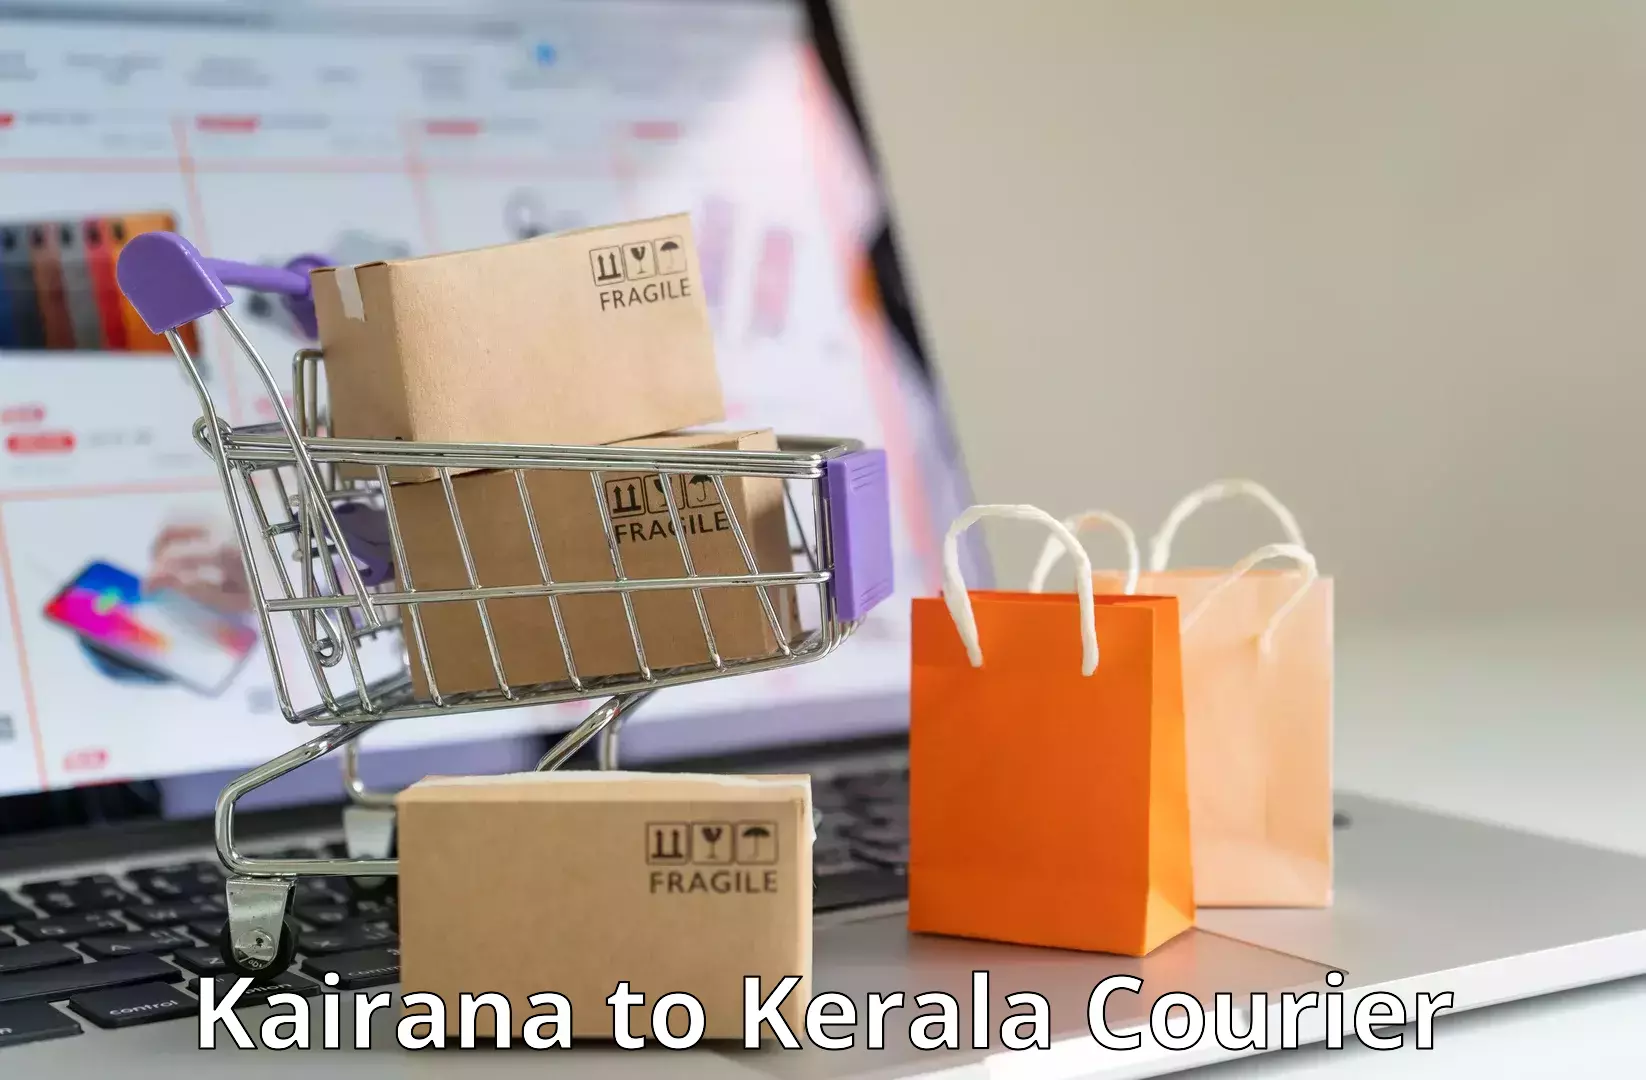 Cash on delivery service Kairana to Kerala